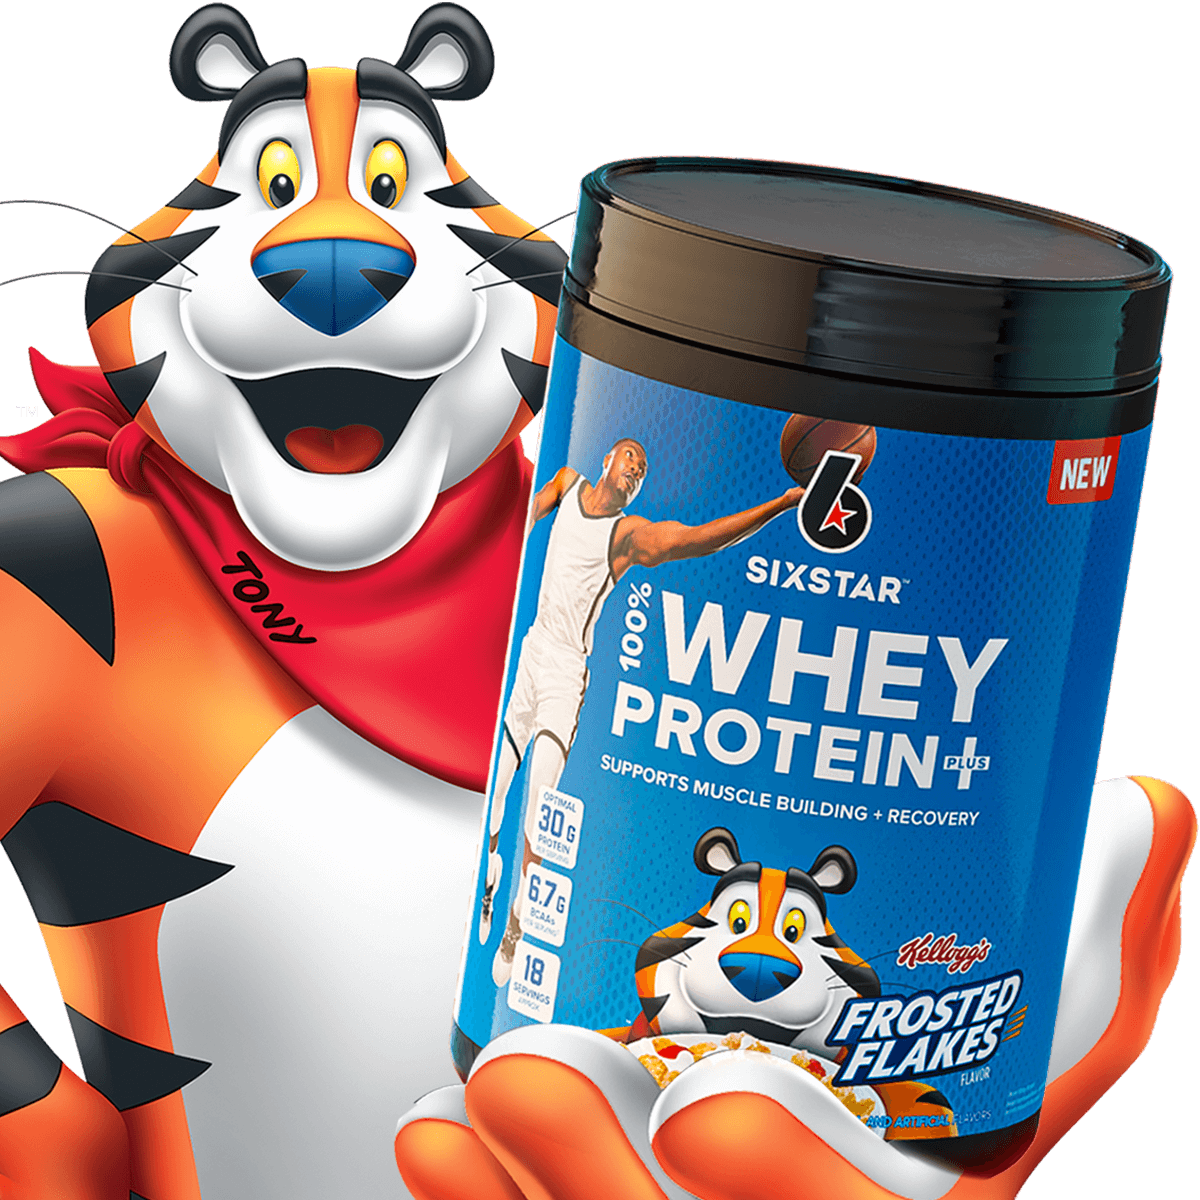 SIXSTAR 100% Whey Protein Plus Kellogg's Frosted Flakes